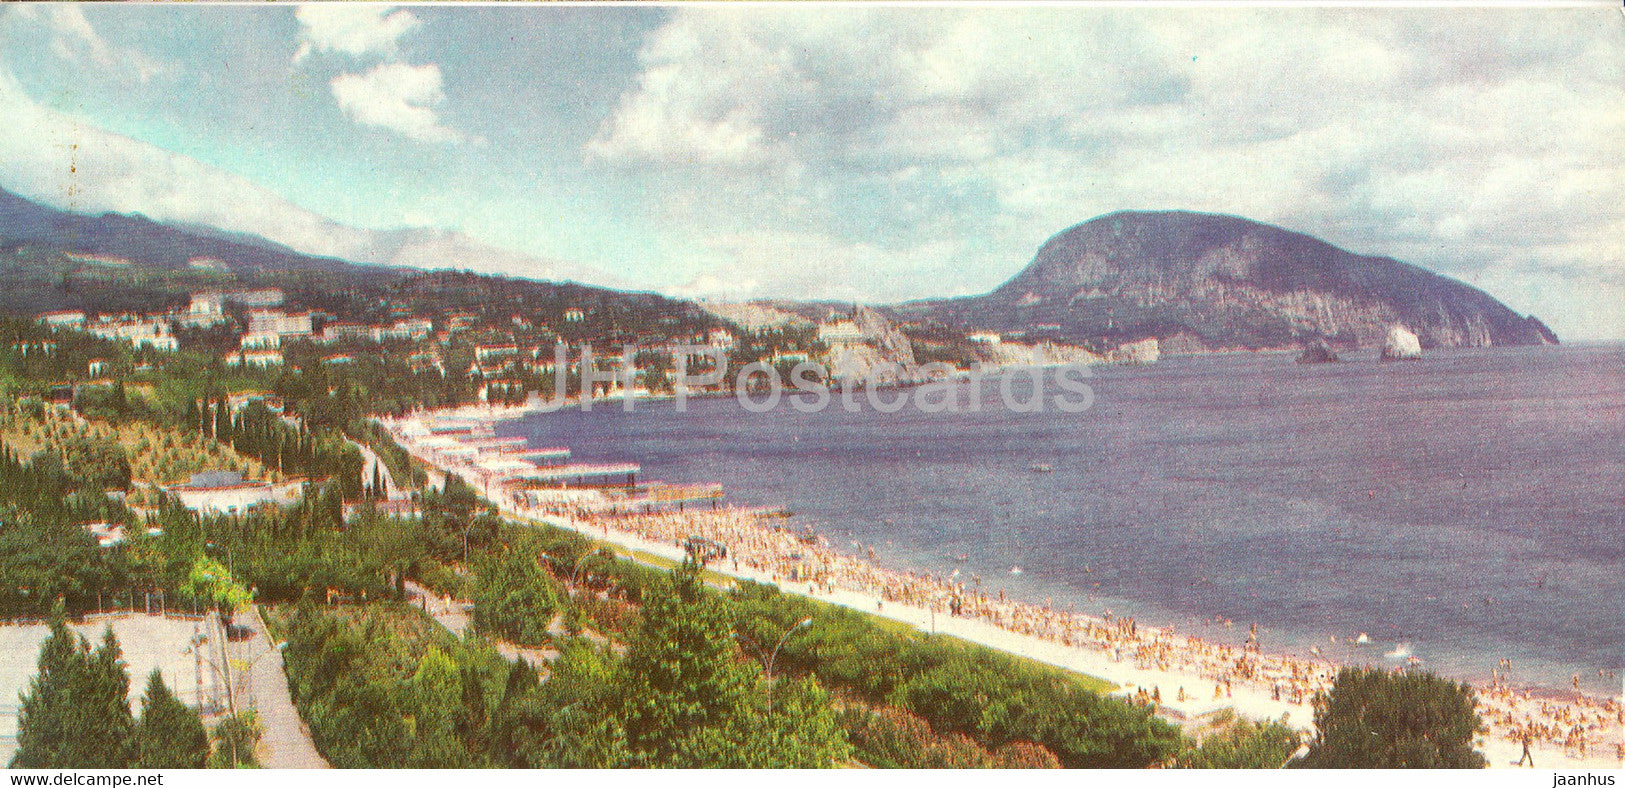 Yalta - Gurzuf and Ayu Dag mountain - Crimea - 1982 - Ukraine USSR - unused - JH Postcards